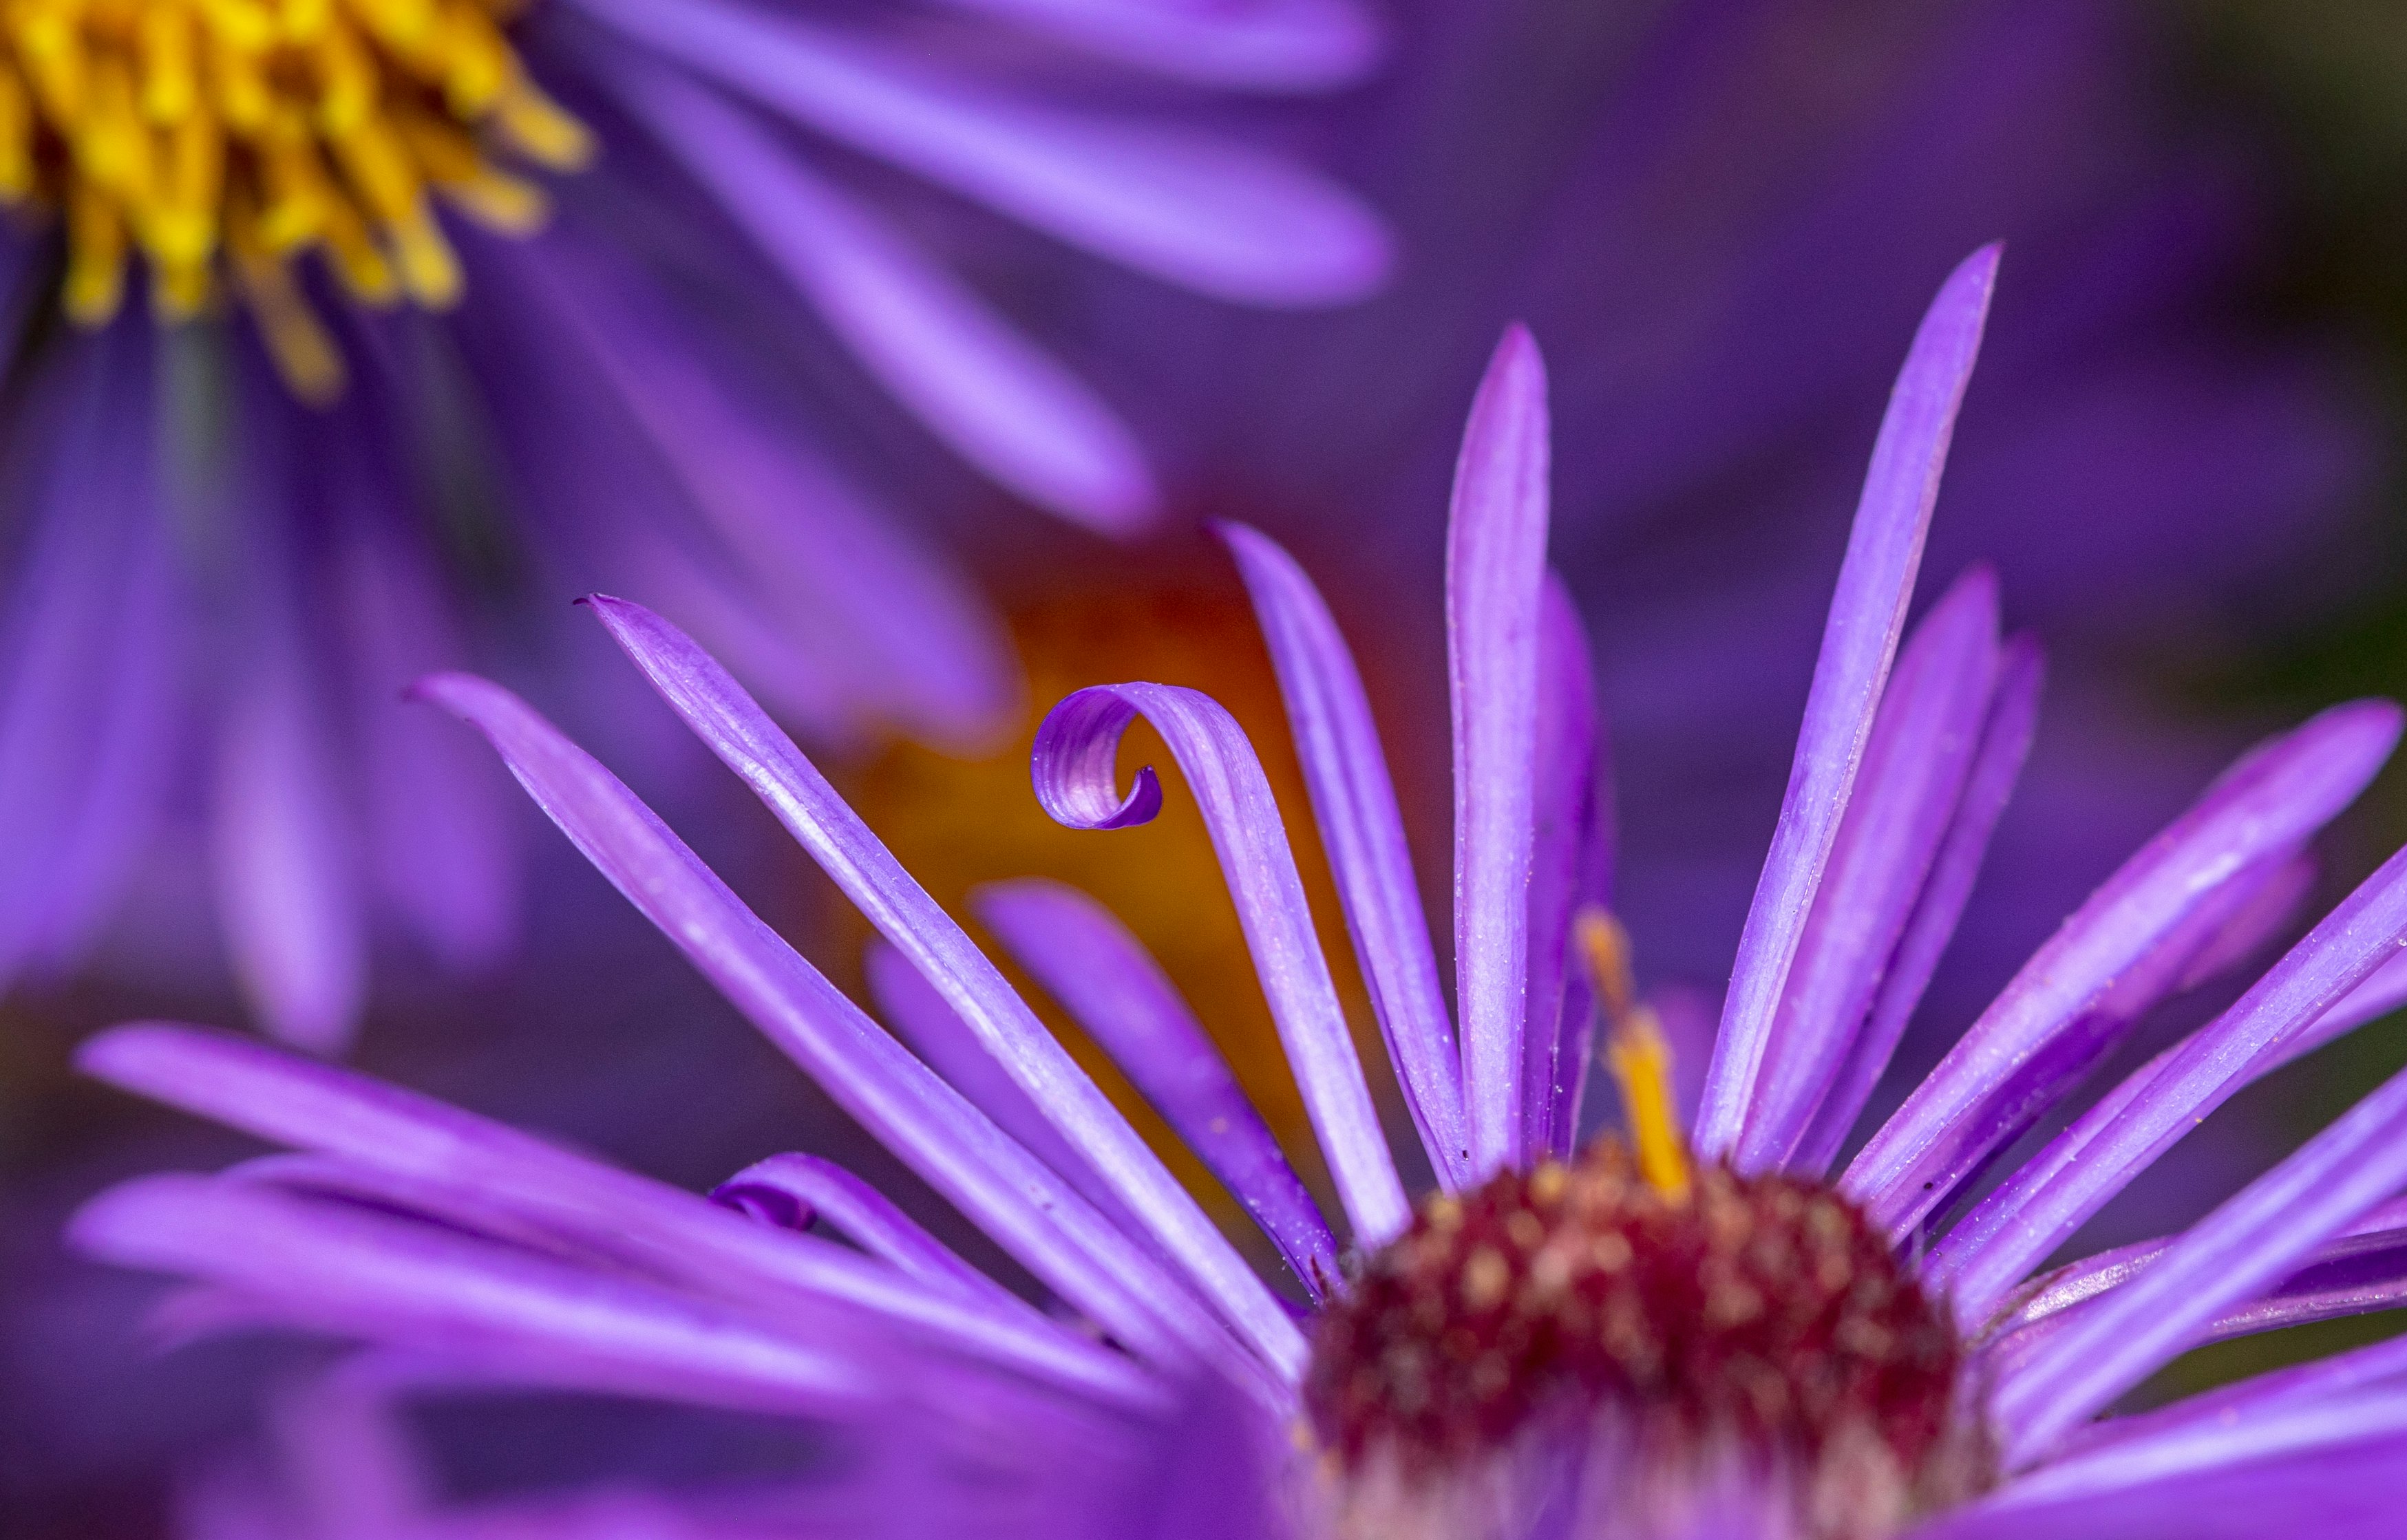 purple flower with orange stigma